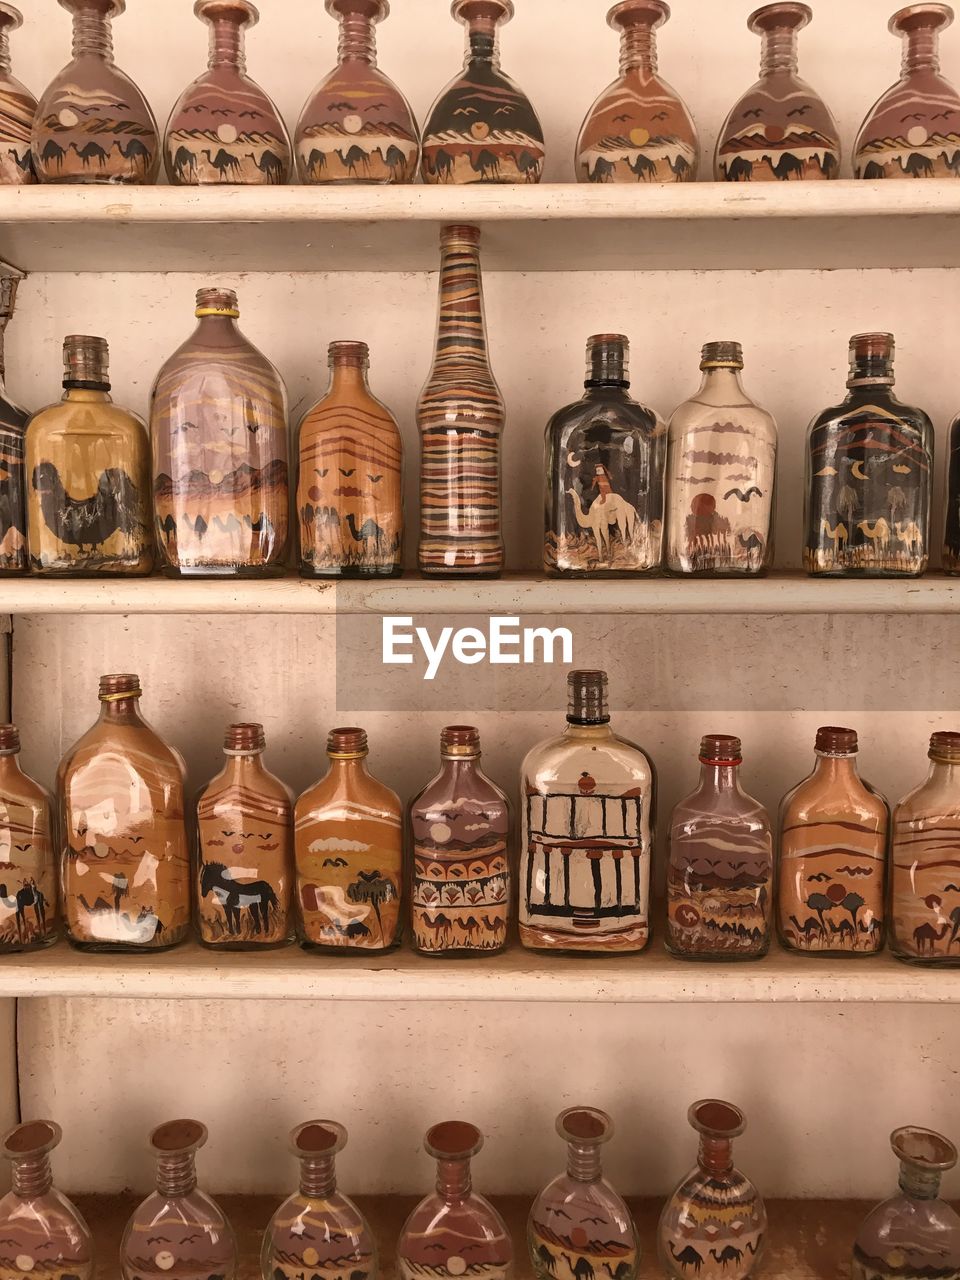 Sand in bottles crafts on shelf in petra, jordan